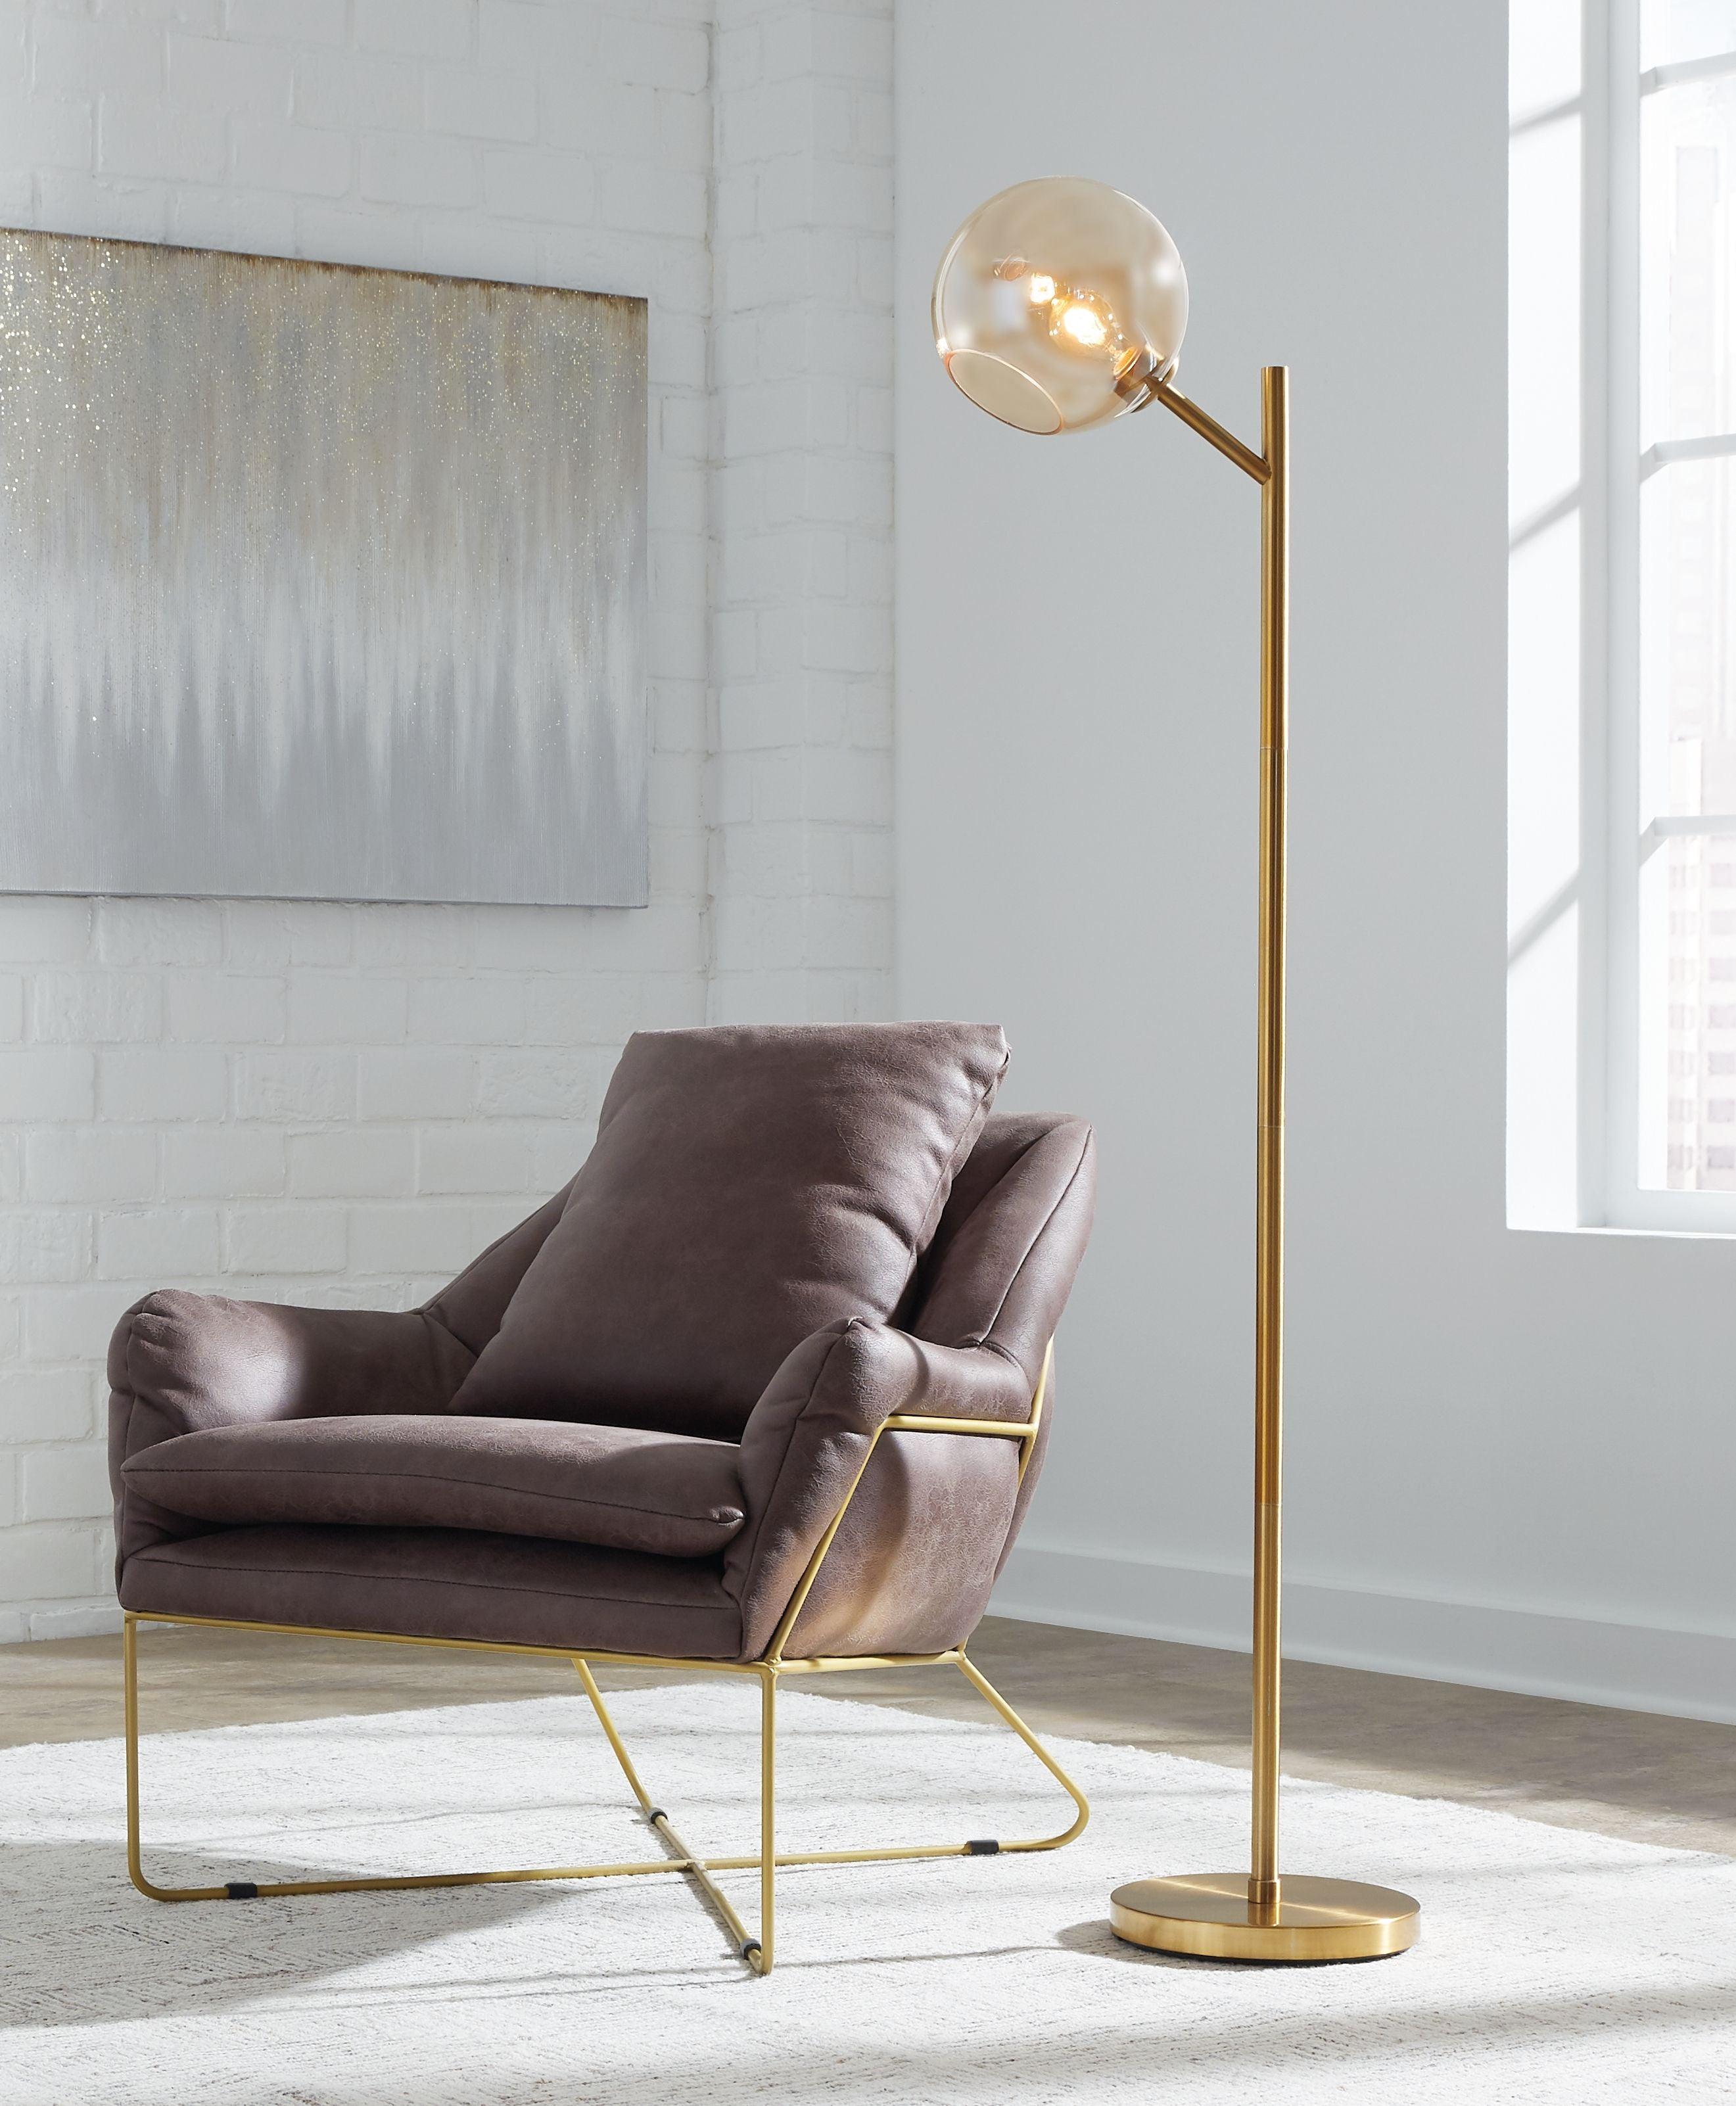 Ashley Furniture - Abanson - Metal Lamp - 5th Avenue Furniture